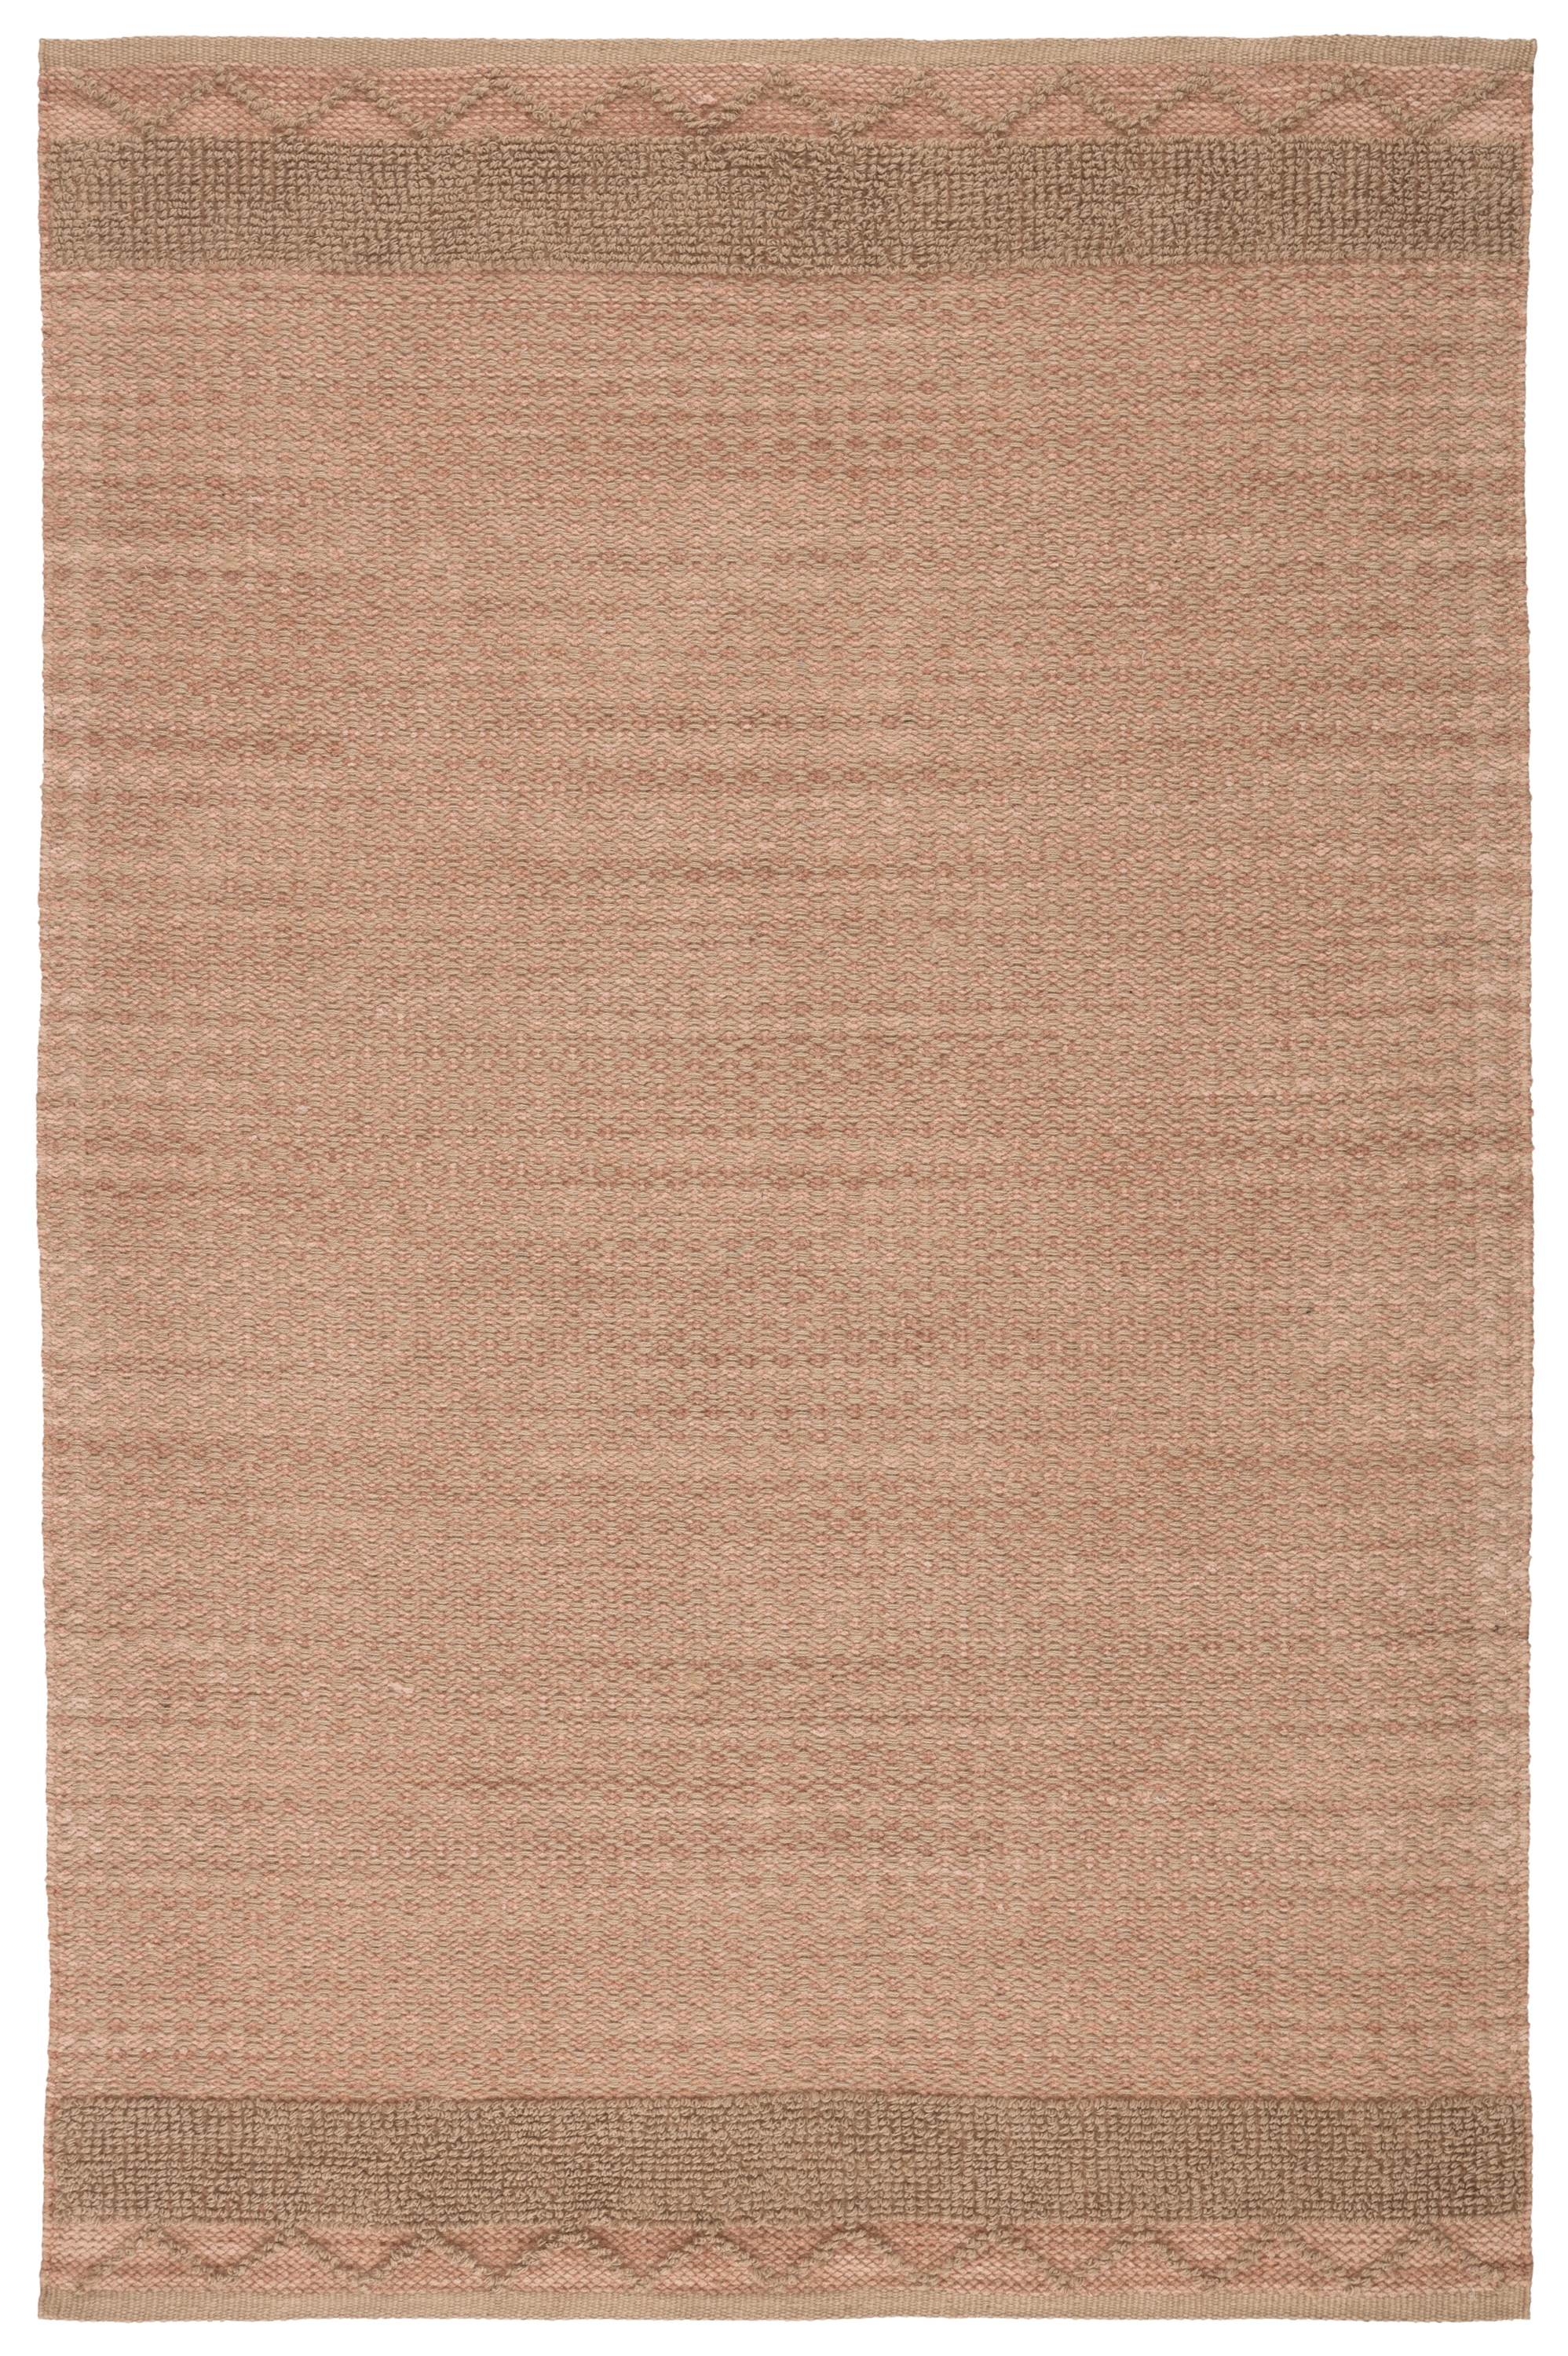 Curran Natural Border Pink/ Tan Area Rug (9'X12') - Image 0